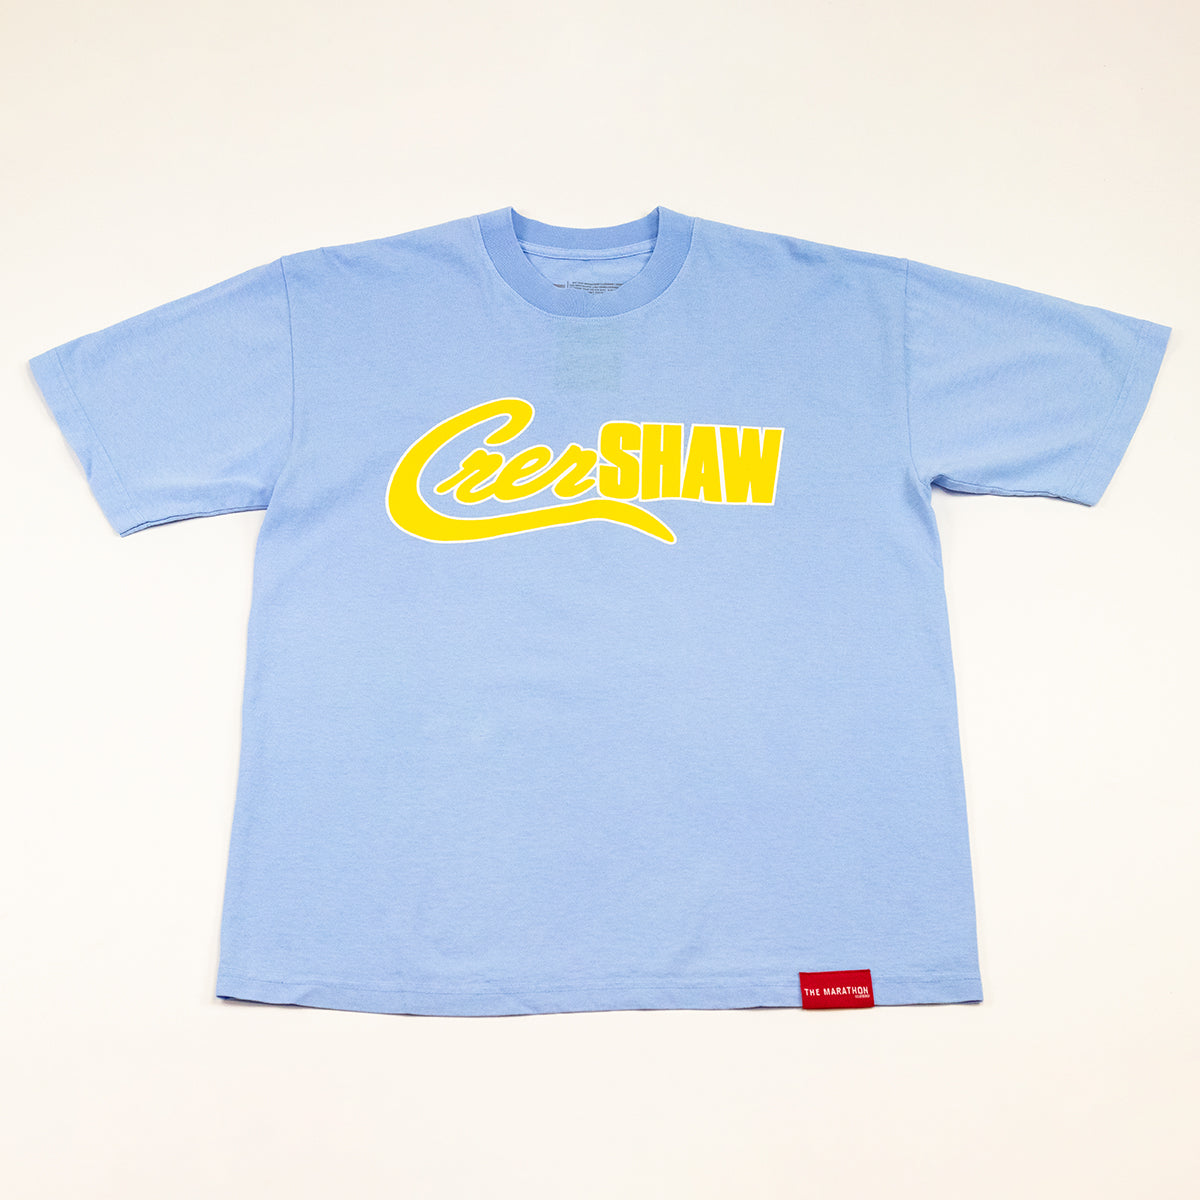 Crenshaw Mashup T-shirt - Light Blue/Gold